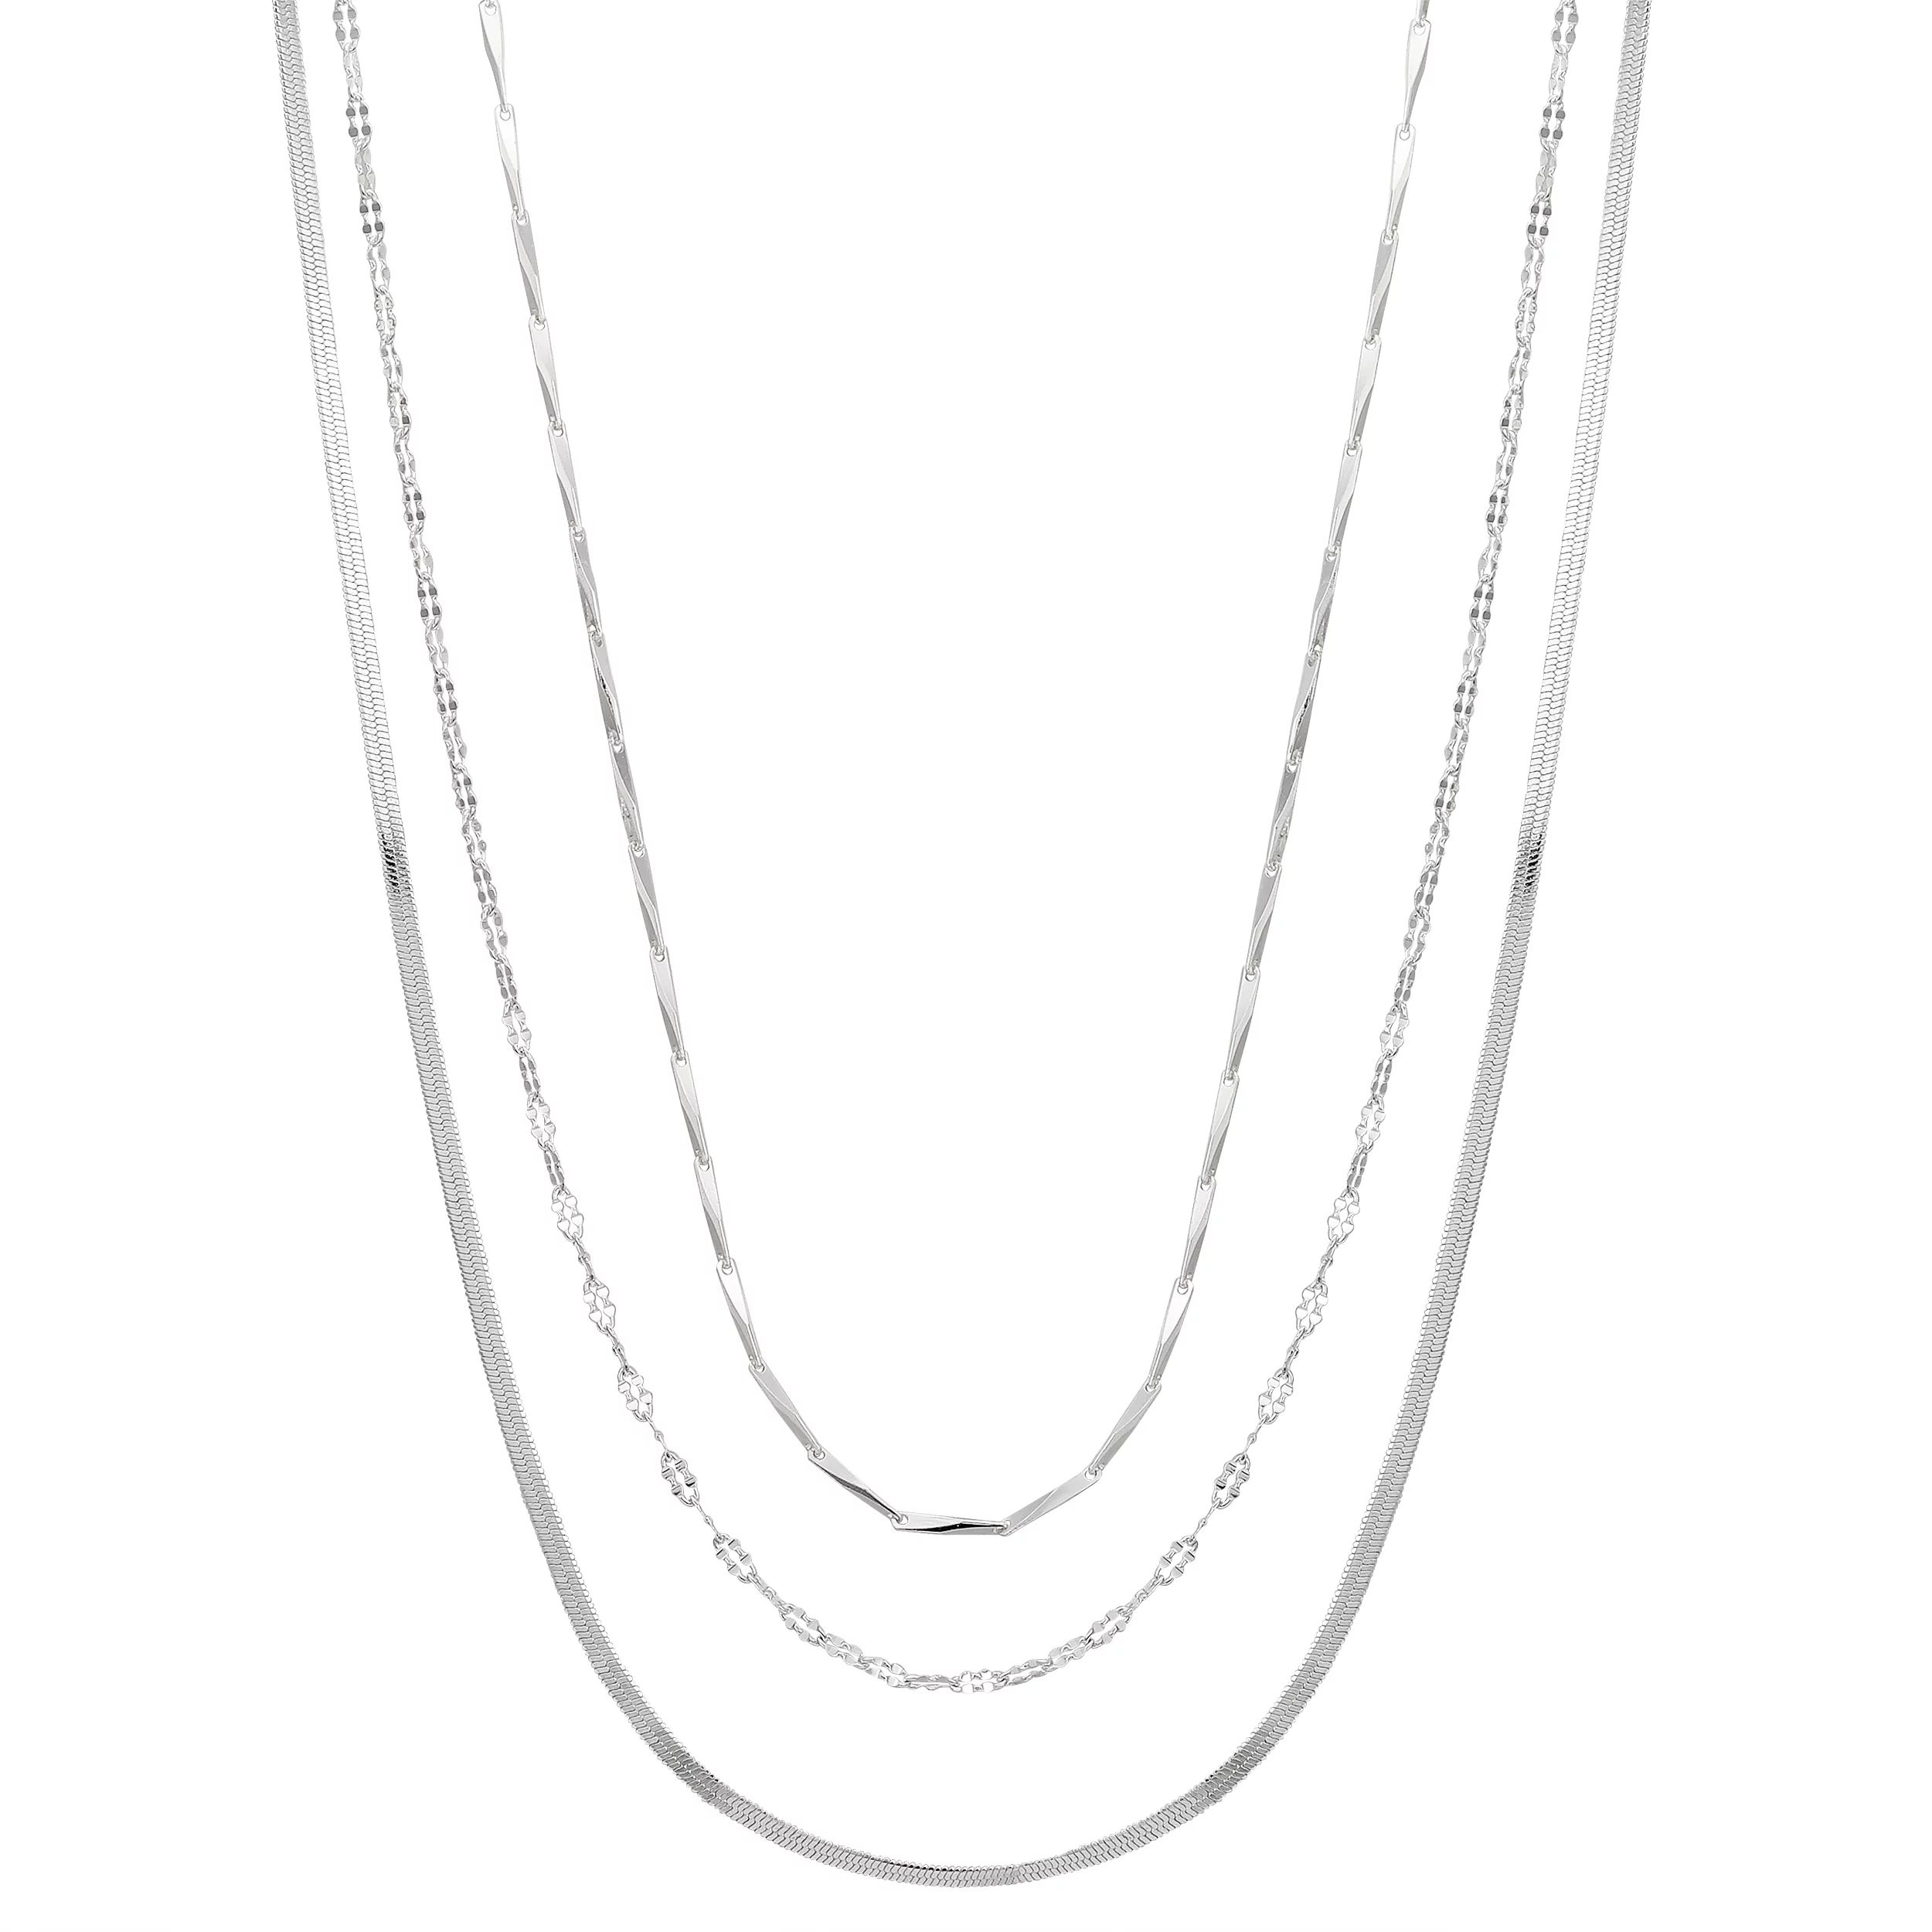 Women's Fine Silver Plated Multi-Length Chain Set, 16+2", 18+2", 20+2" | Walmart (US)